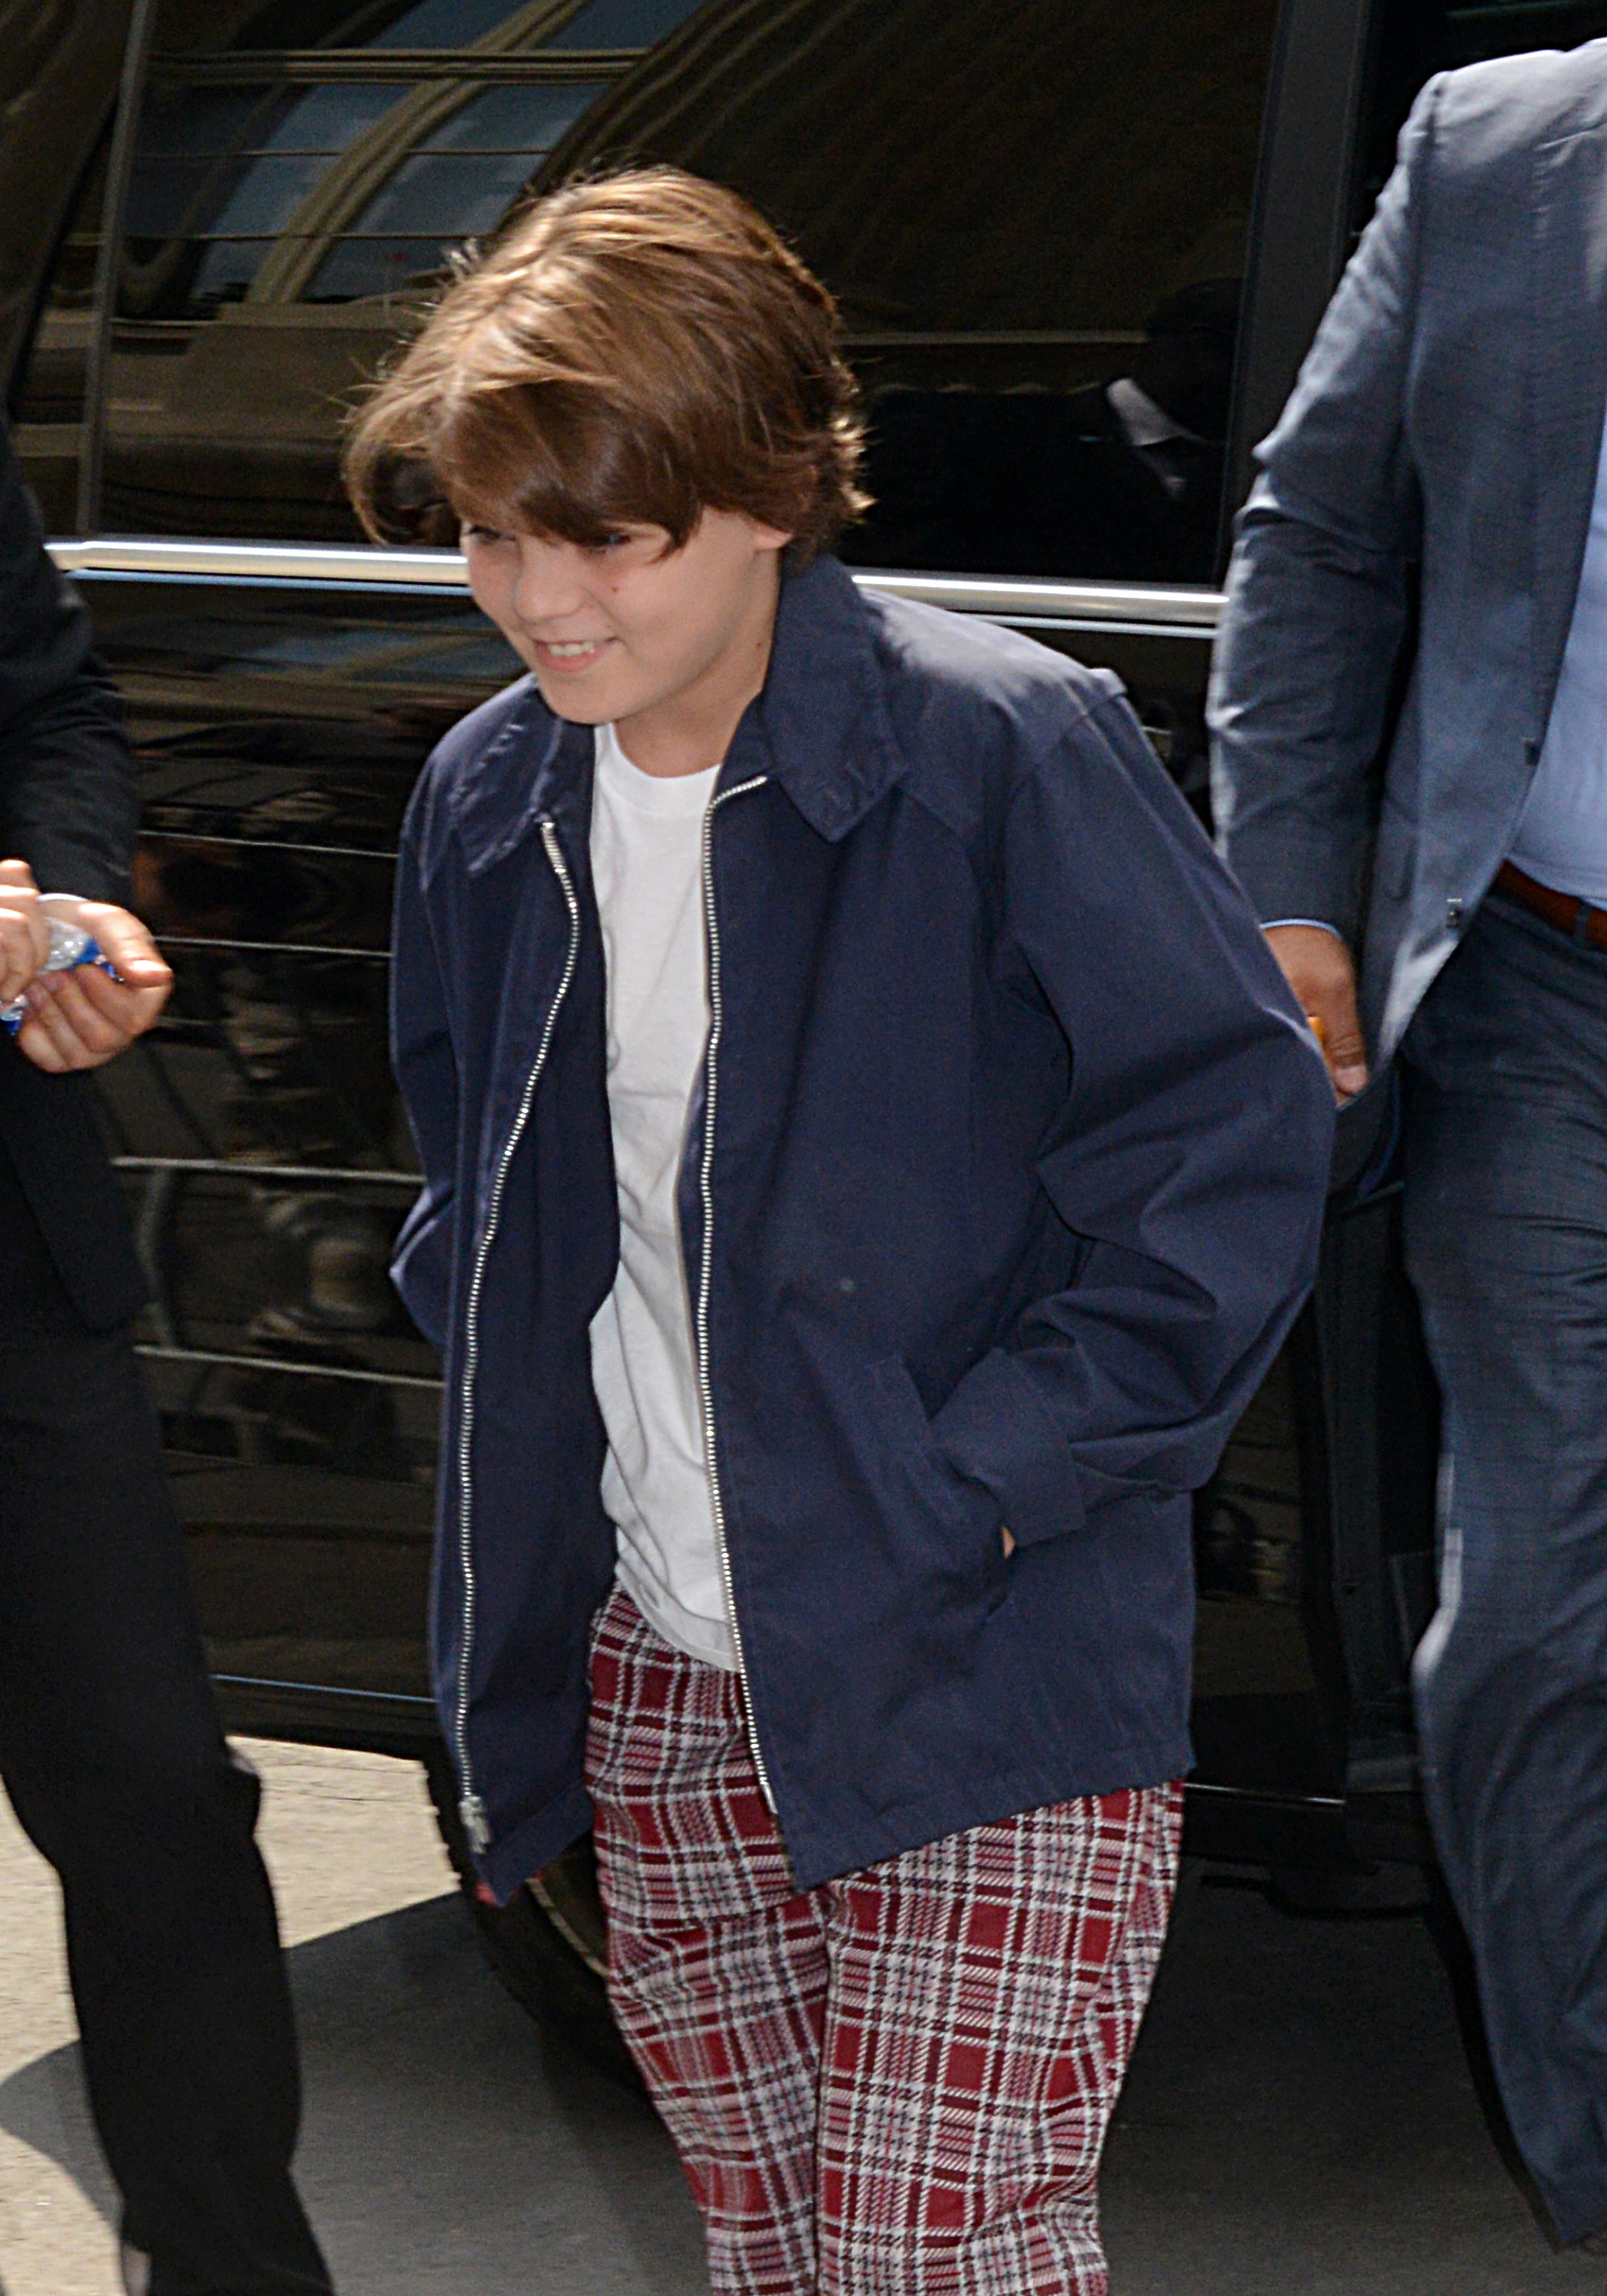 Jack Depp arriving at Paris Fashion Week in Paris, France on July 7, 2015 | Source: Getty Images